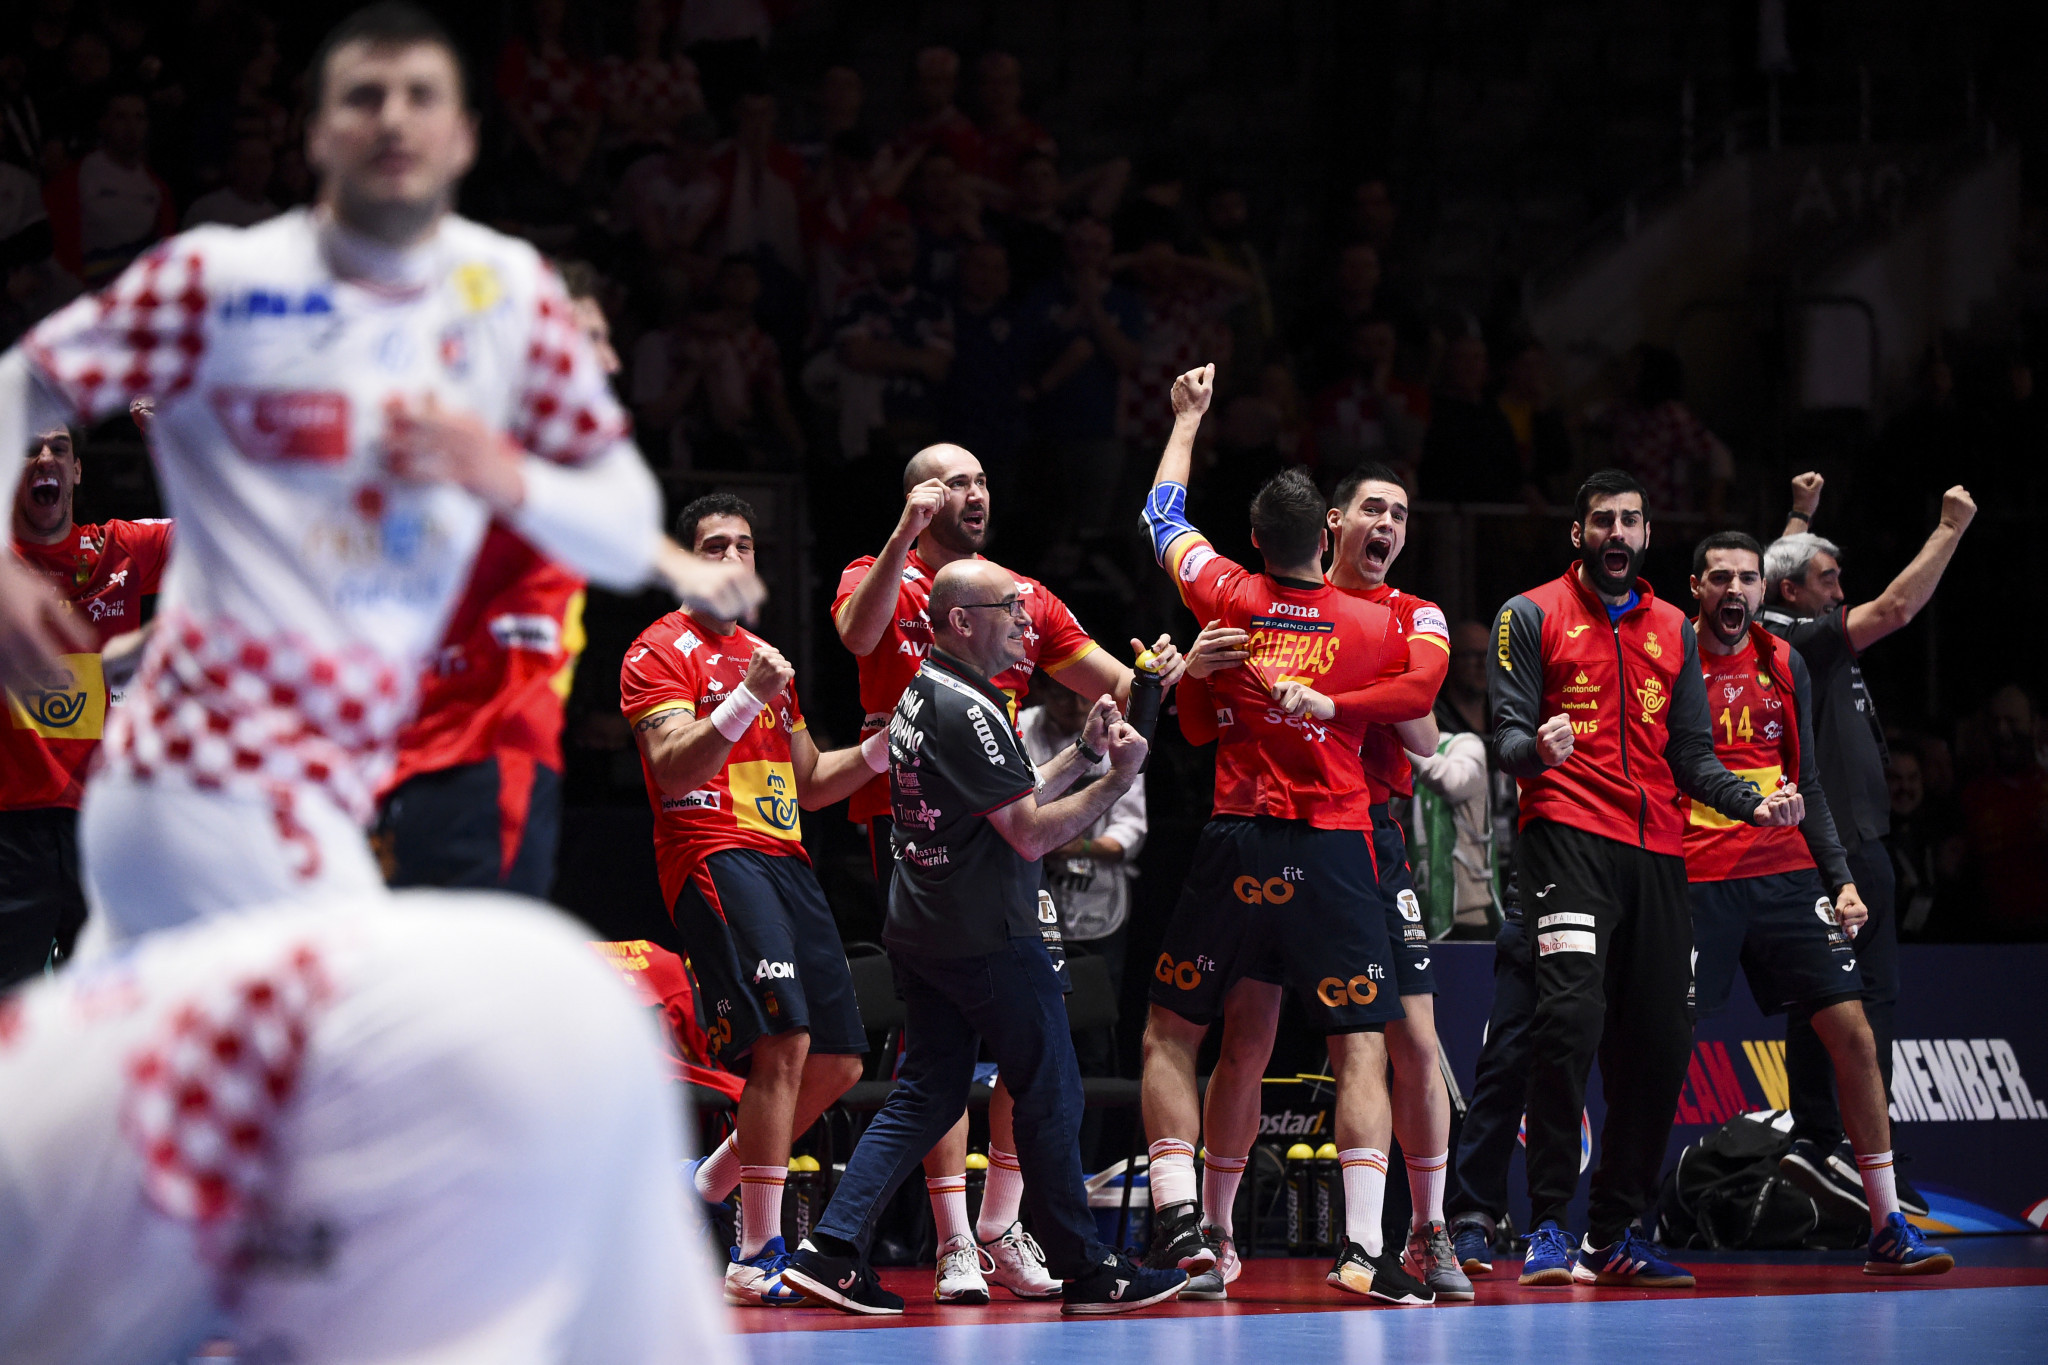 Spain retain European Men's Handball Championship after tight final